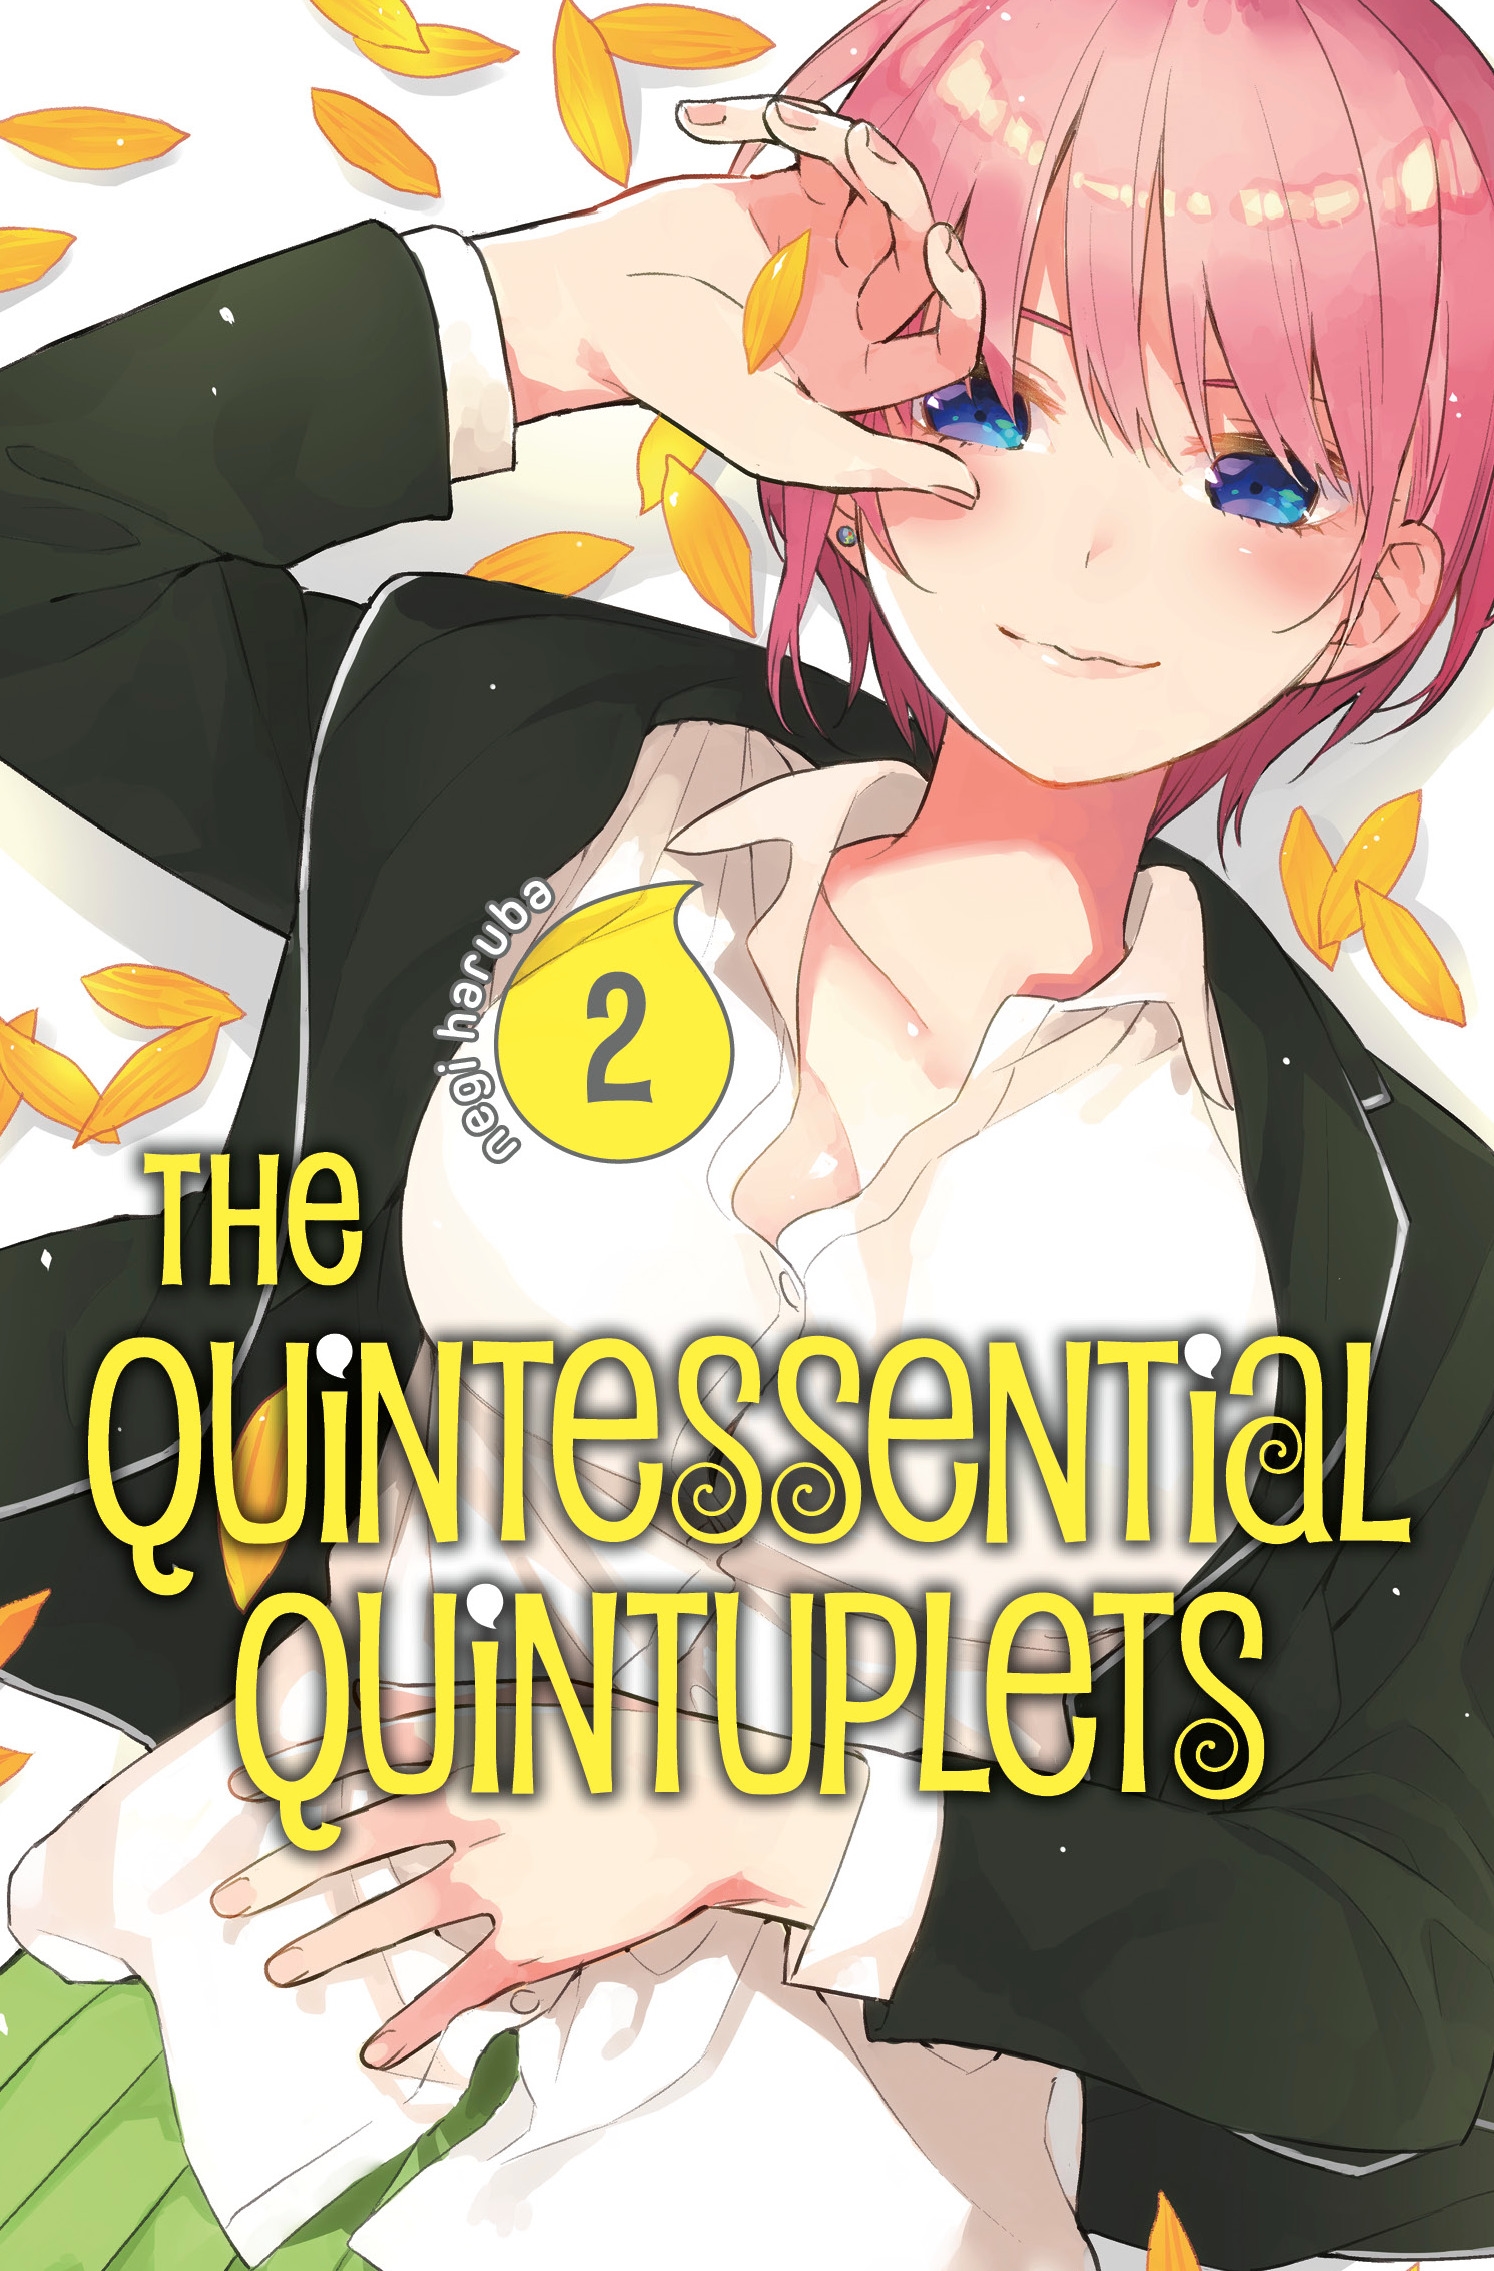 The Quintessential Quintuplets Lands Novel Series